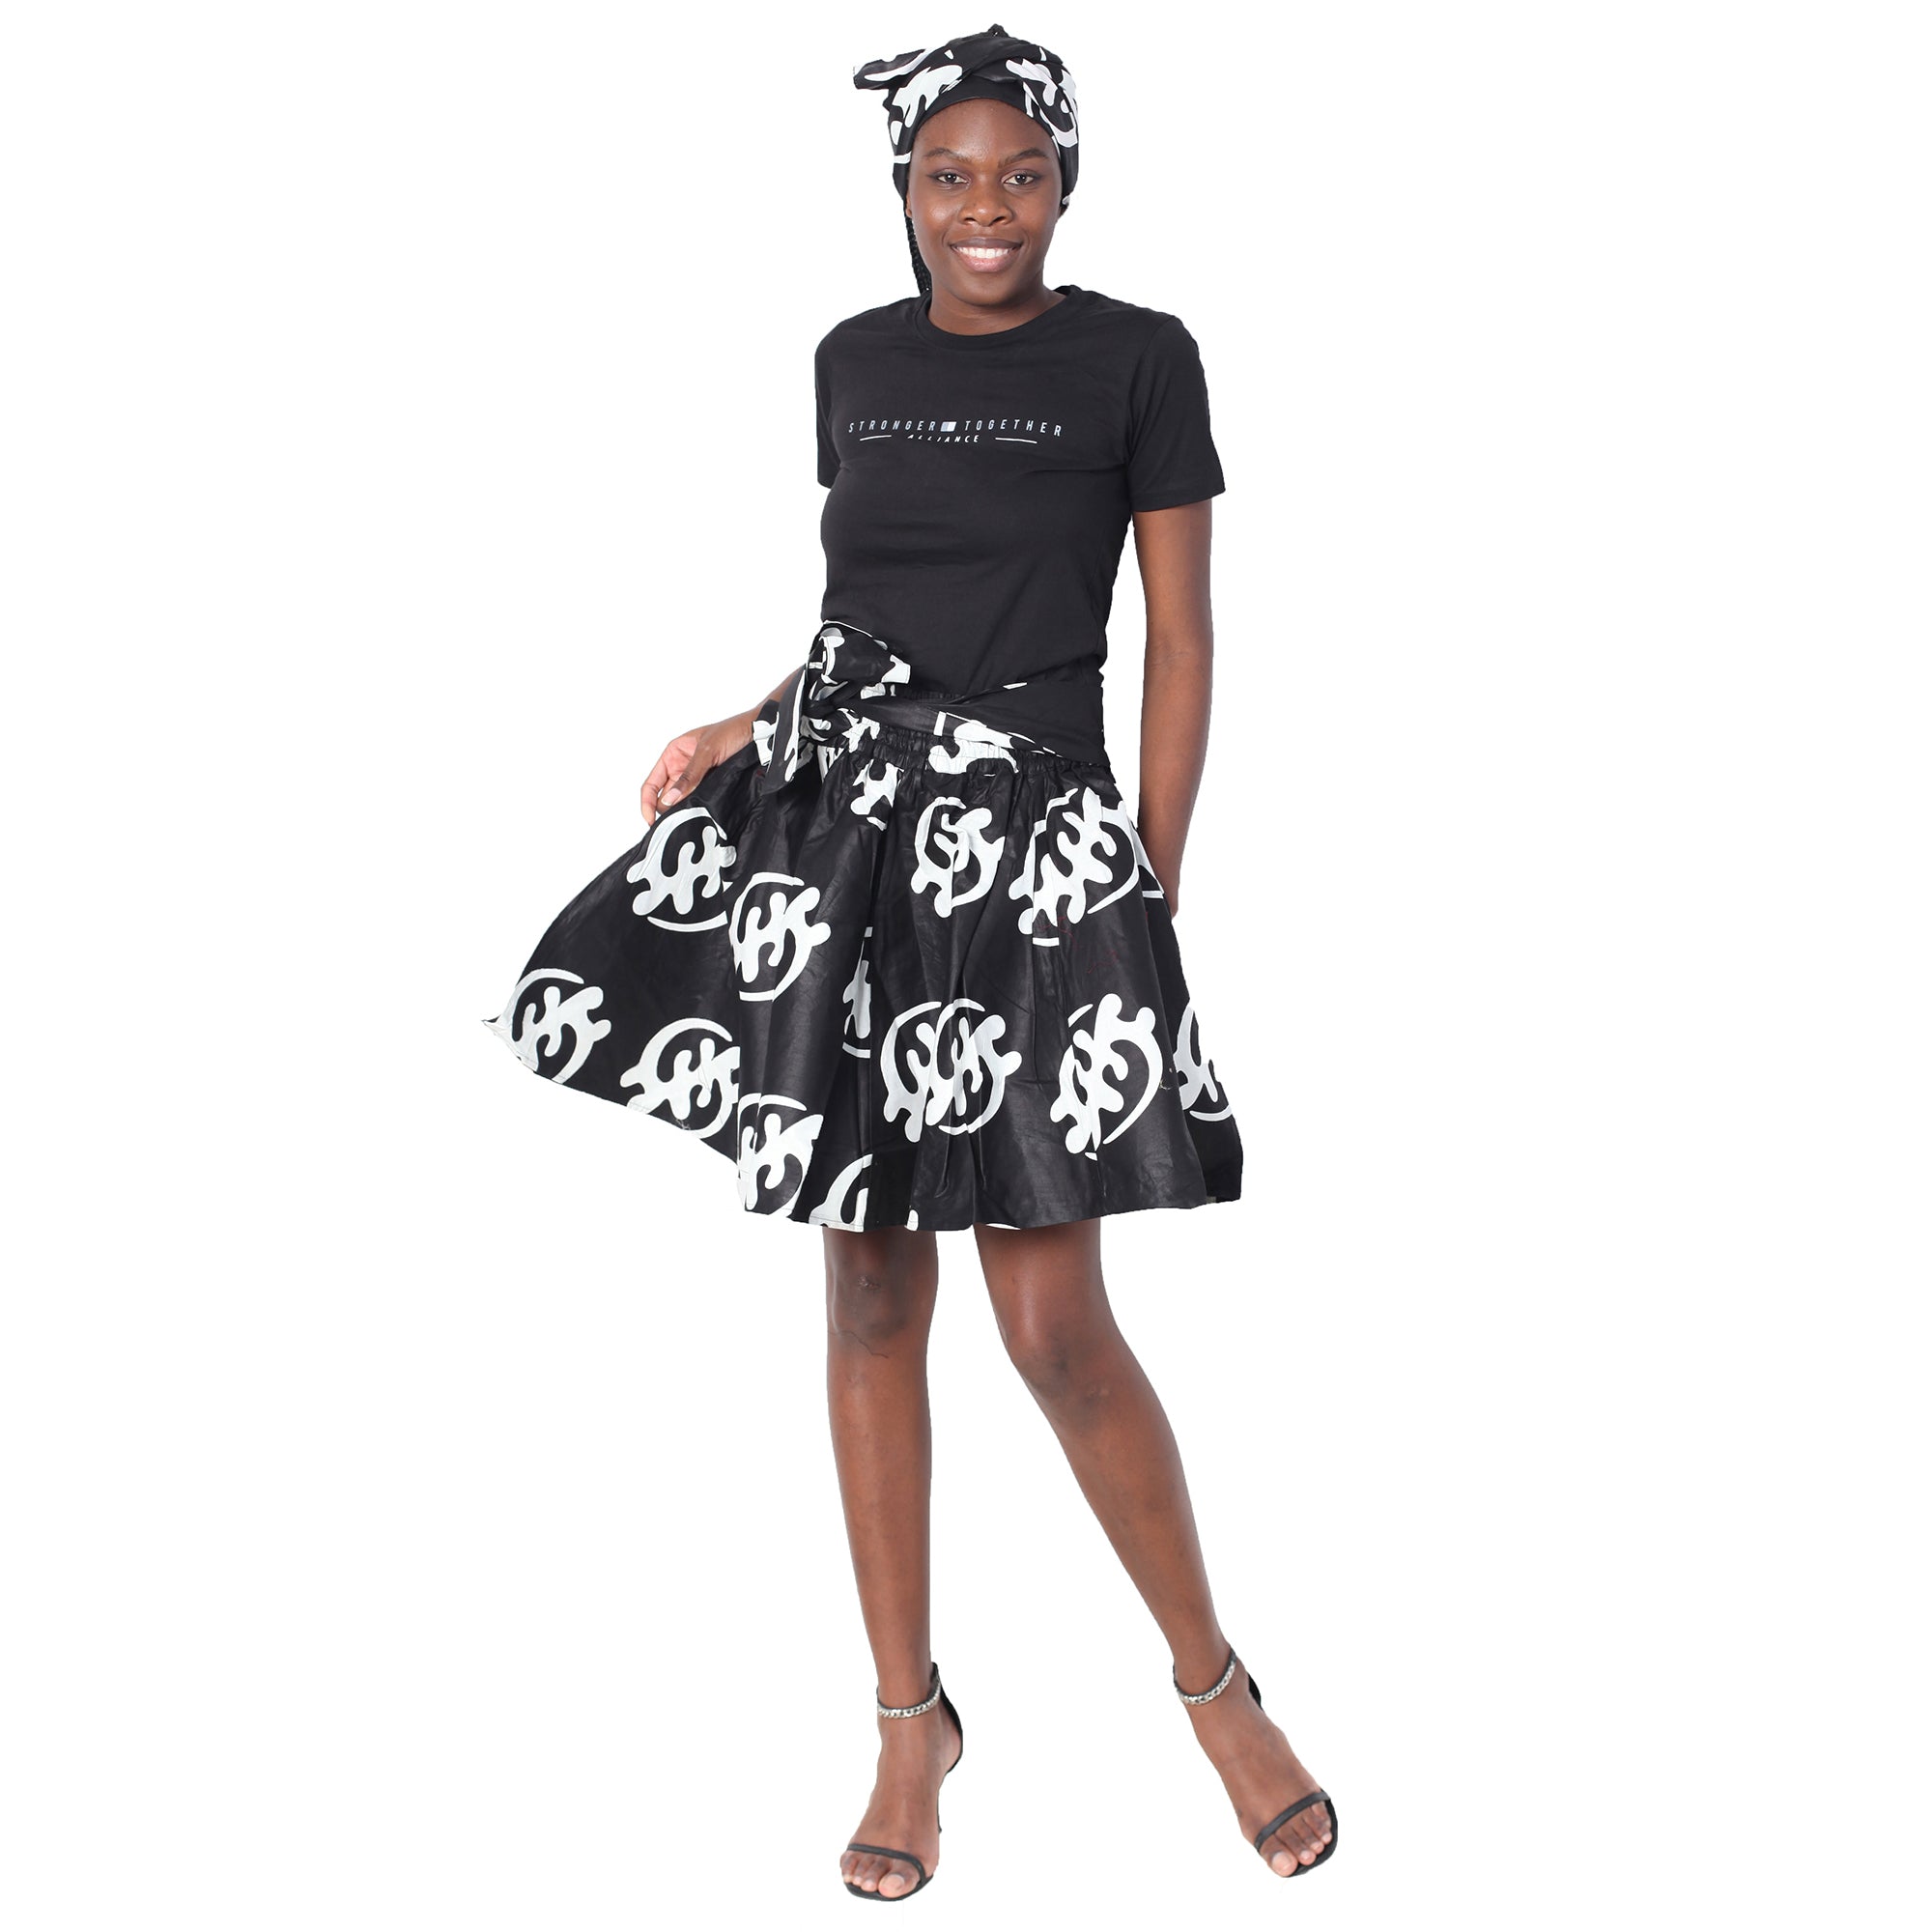 Women's African Printed Mini Skirt with Tie Waist -- FI-51P